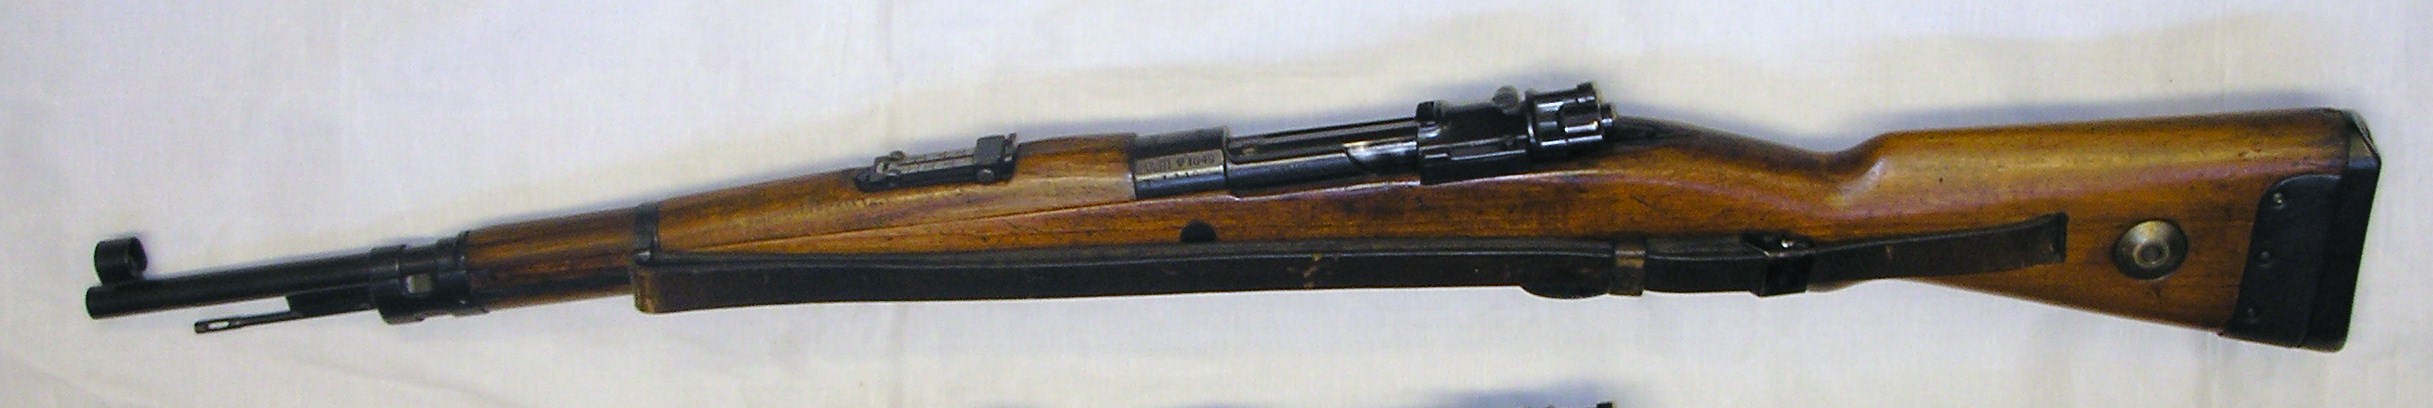 ./guns/rifle/bilder/Rifle-Kongsberg-Mauser-G3340-POLITI-1649-2.JPG